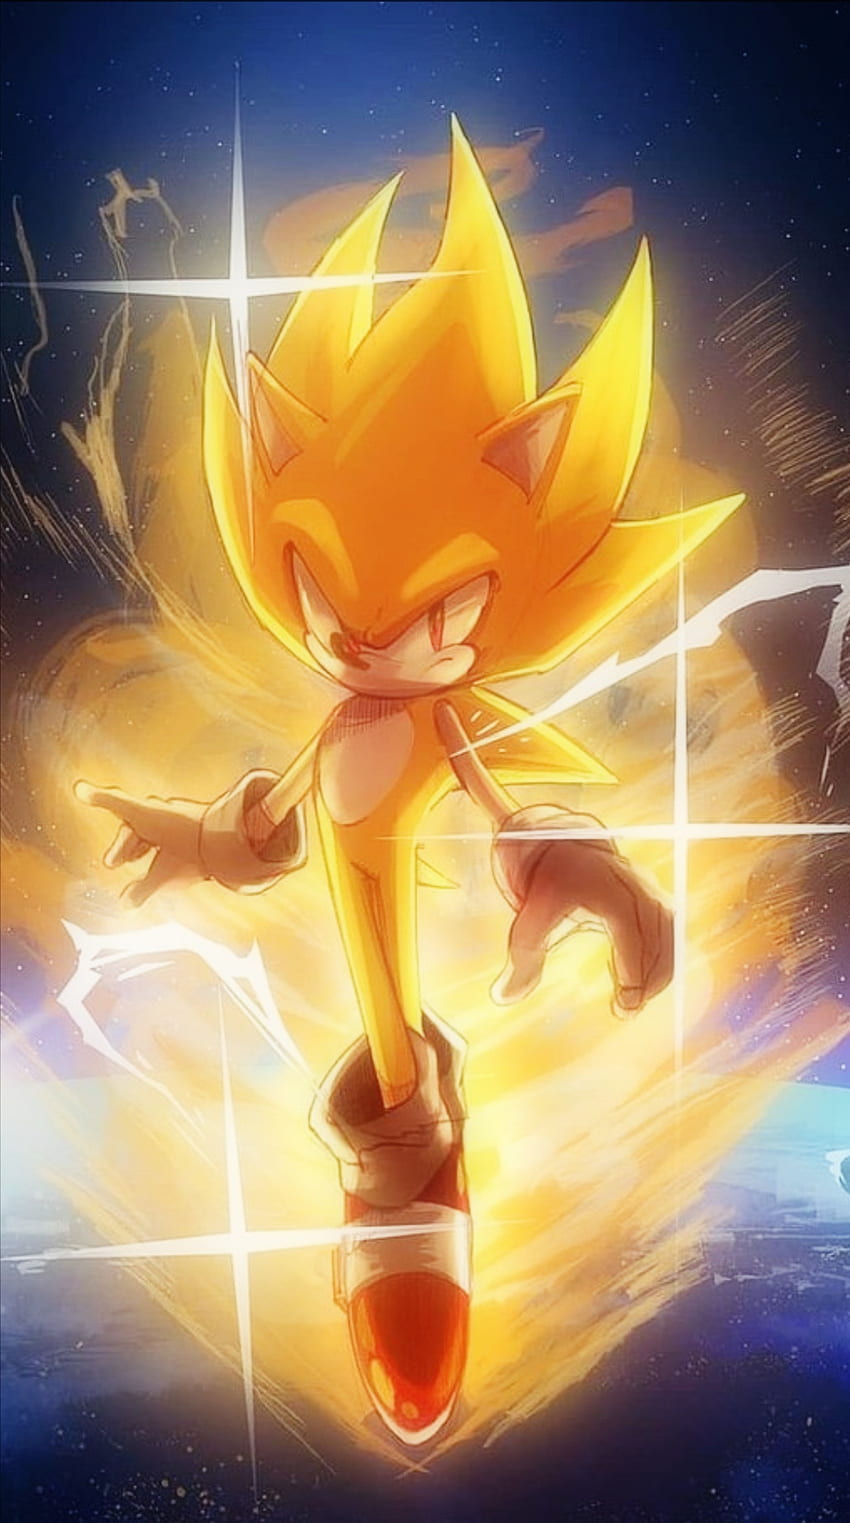 Super Sonic anime by Banjo2015 on DeviantArt